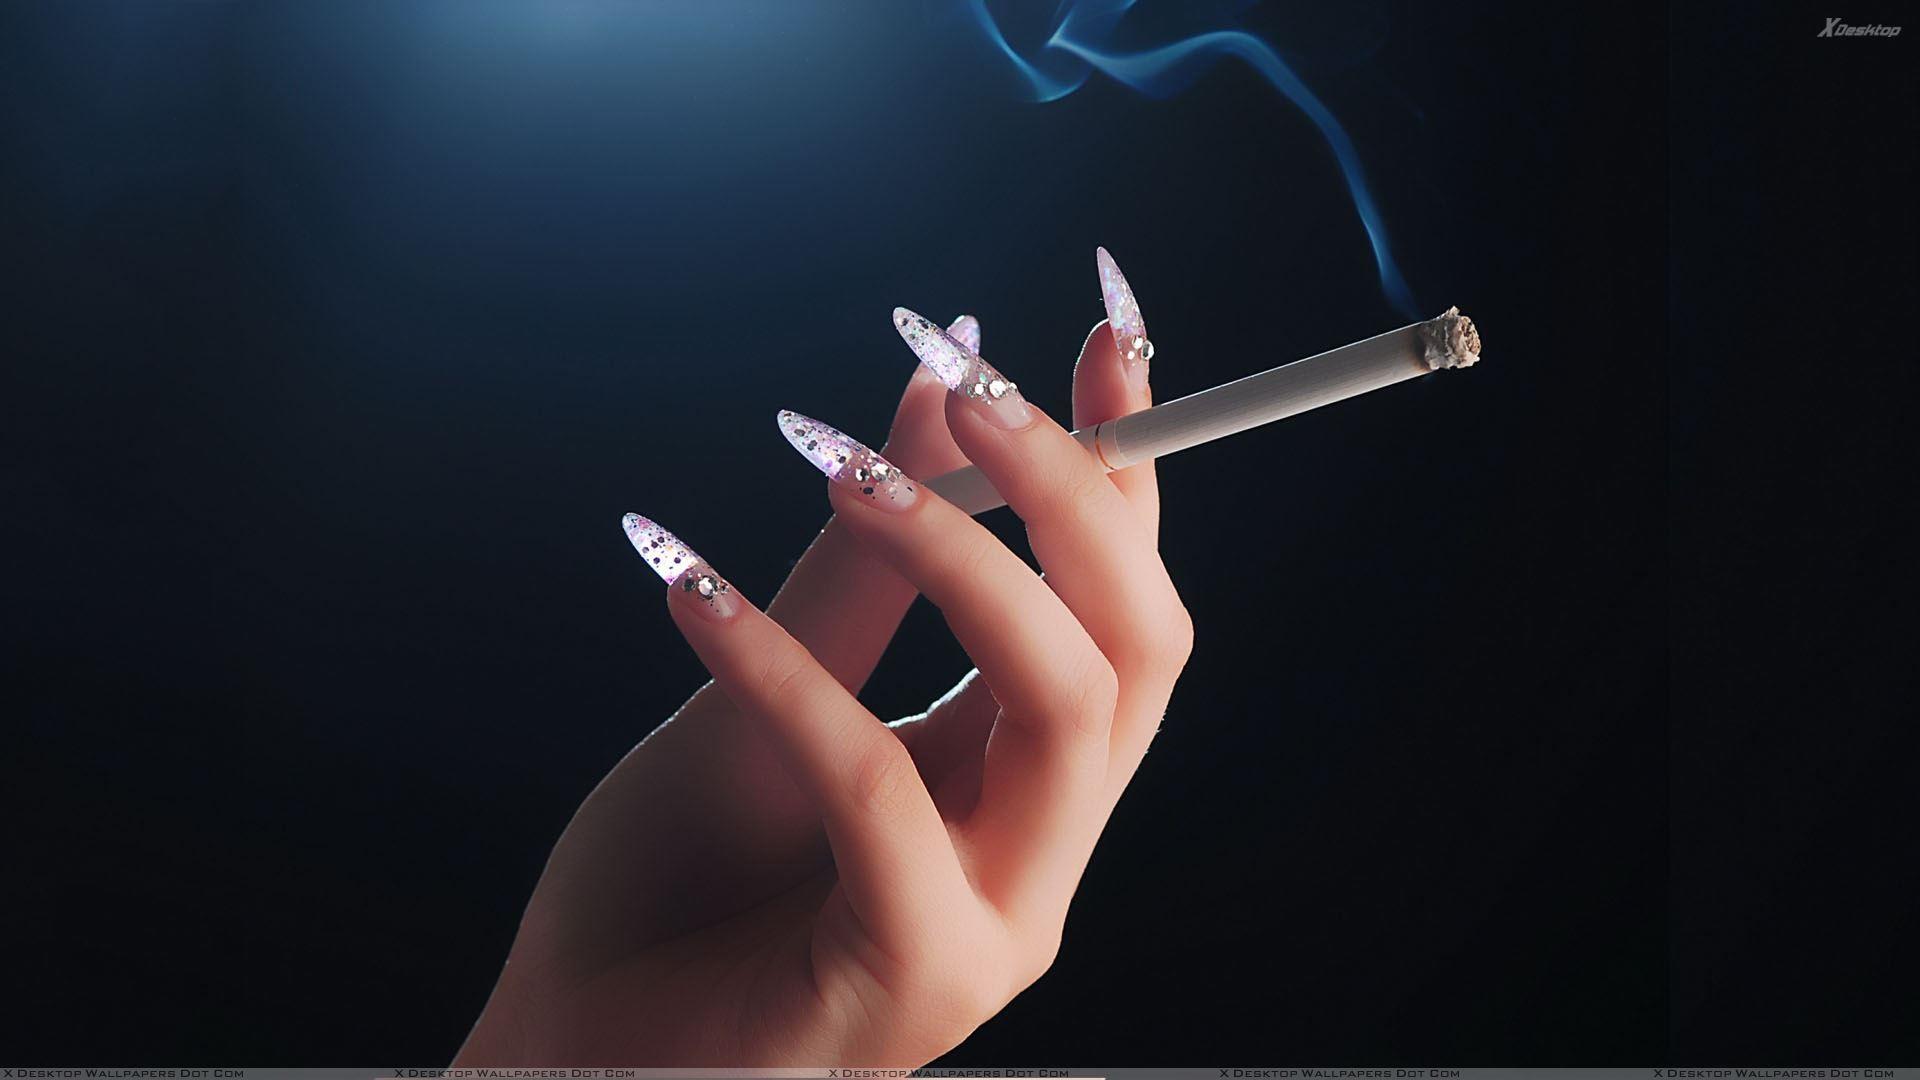 Cigarette In Girls Hand Closeup Wallpaper